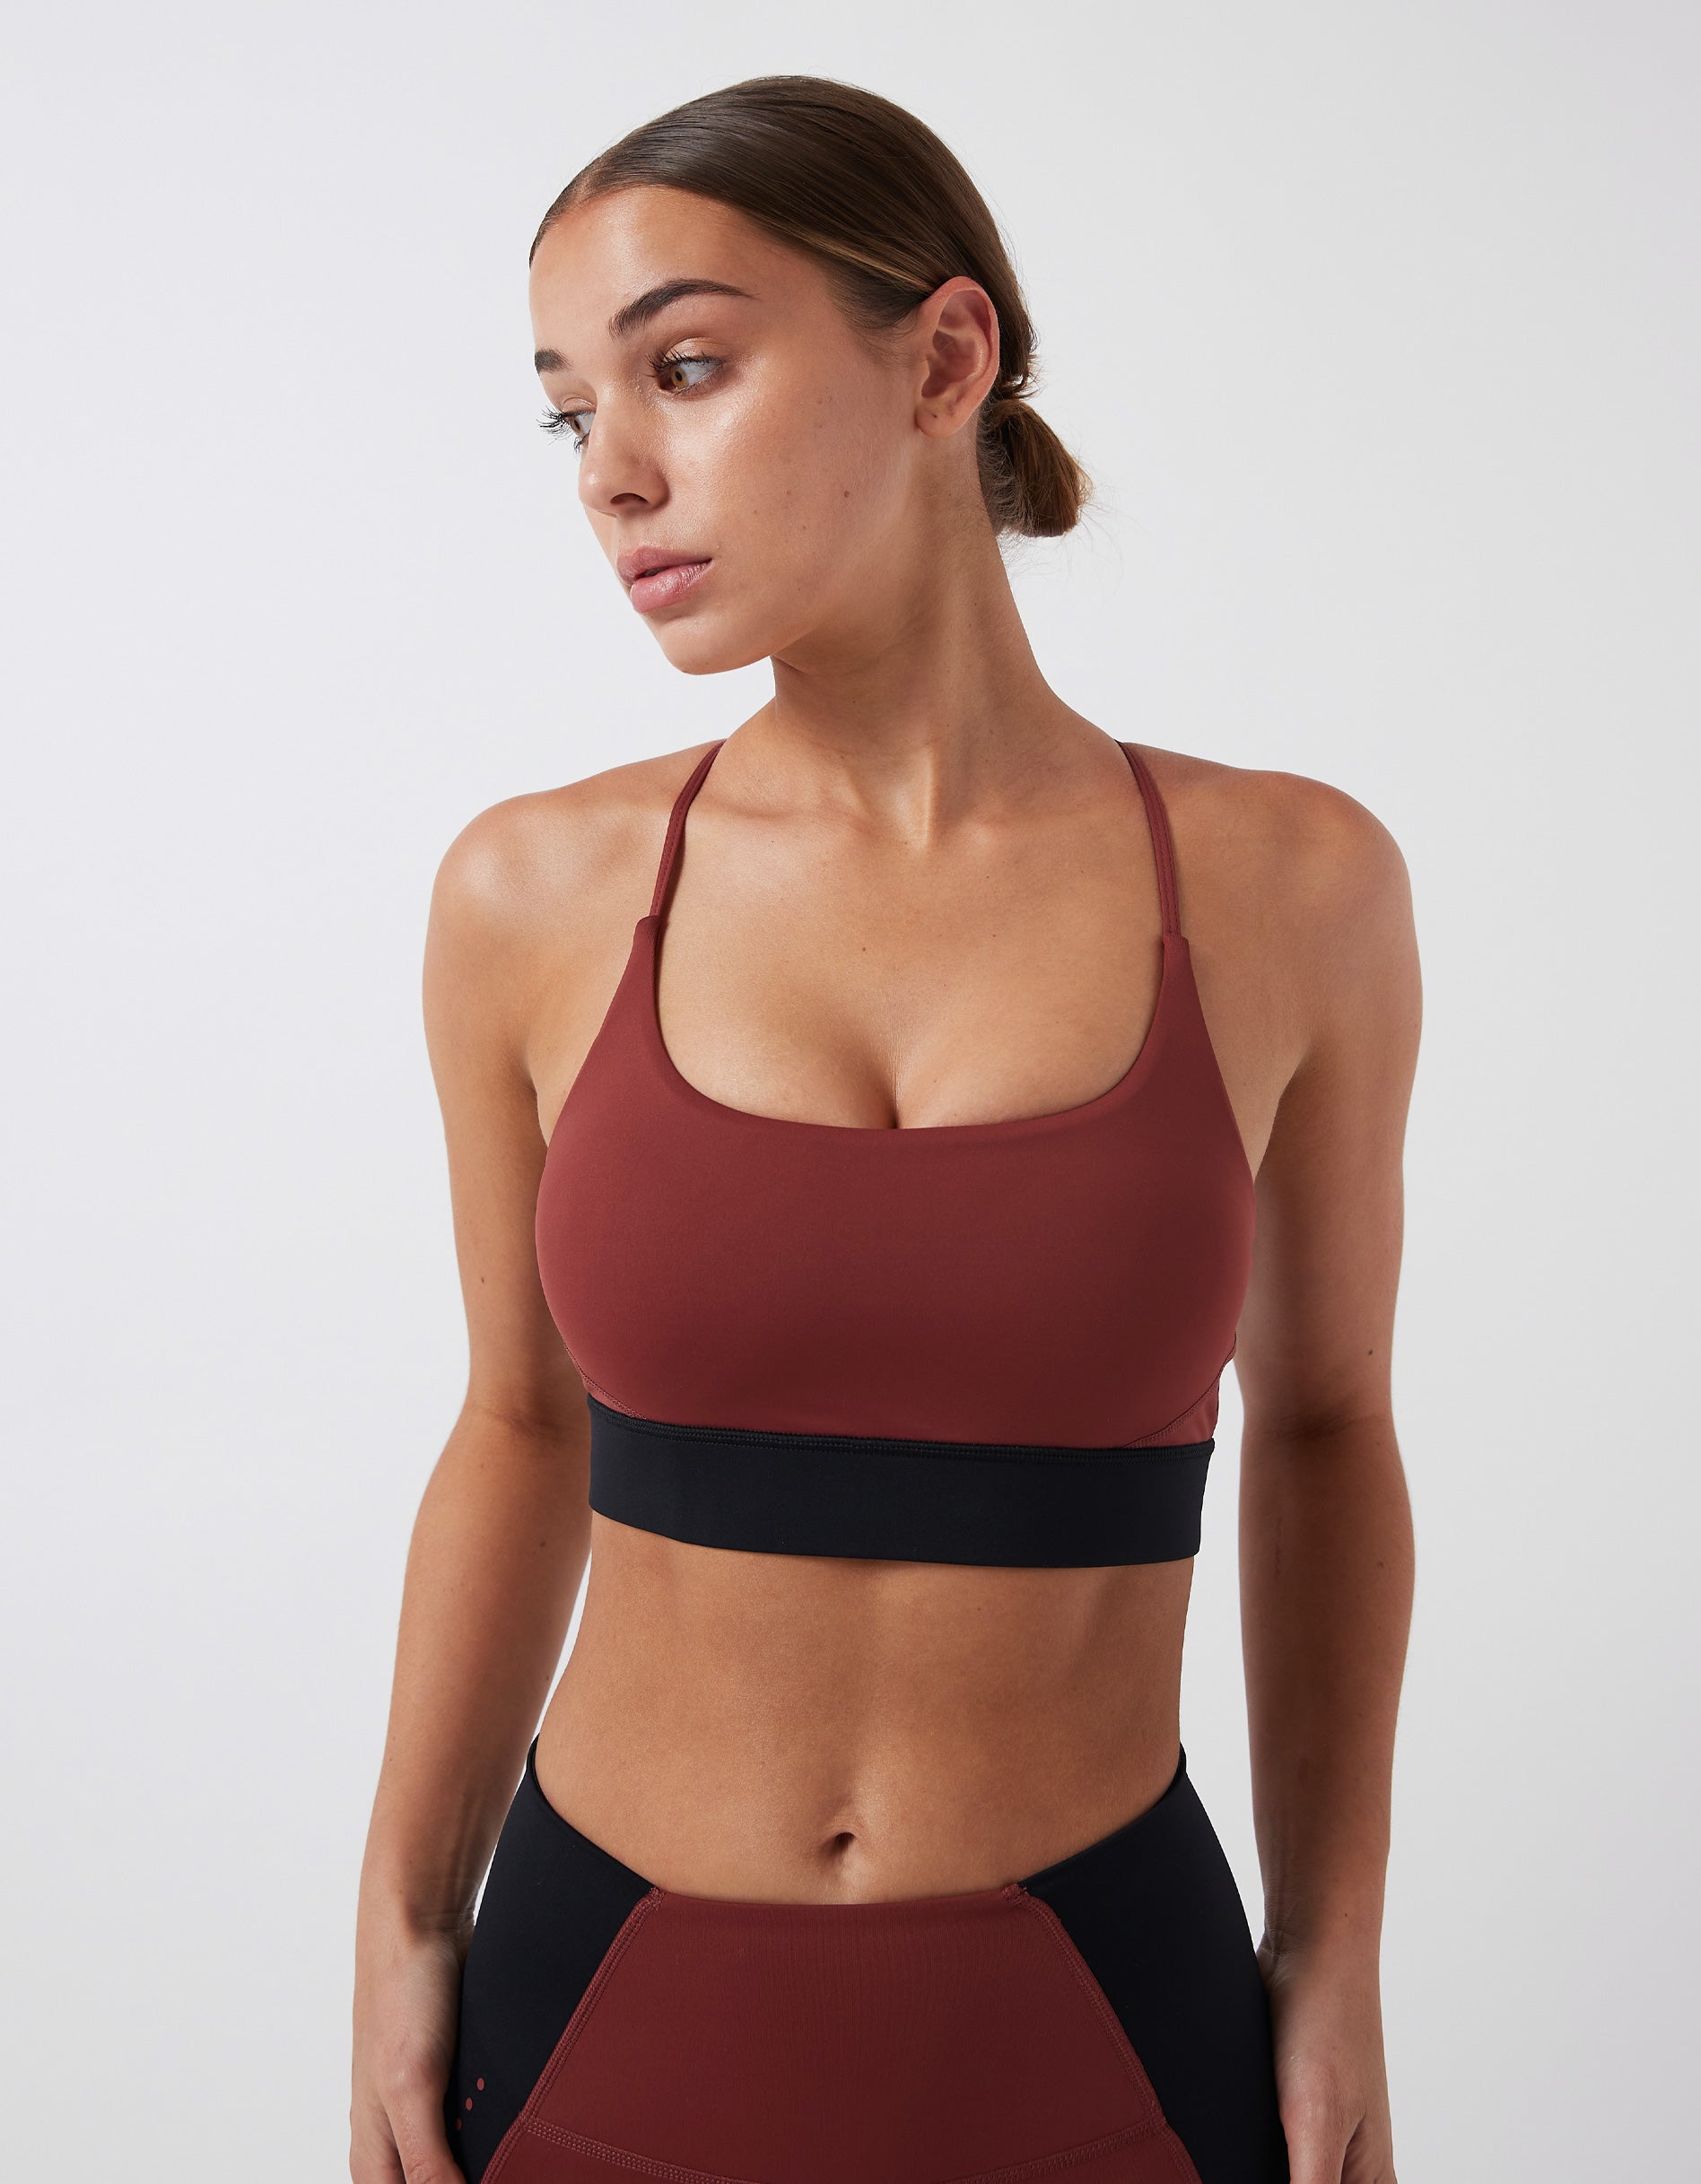 SHINBENE TUBE Padded Yoga Sports Bras Crop Tops Women Sweat-wicking Soft  Nylon Fitness Gym Workout Bras Athletic Brassiere XS-XL